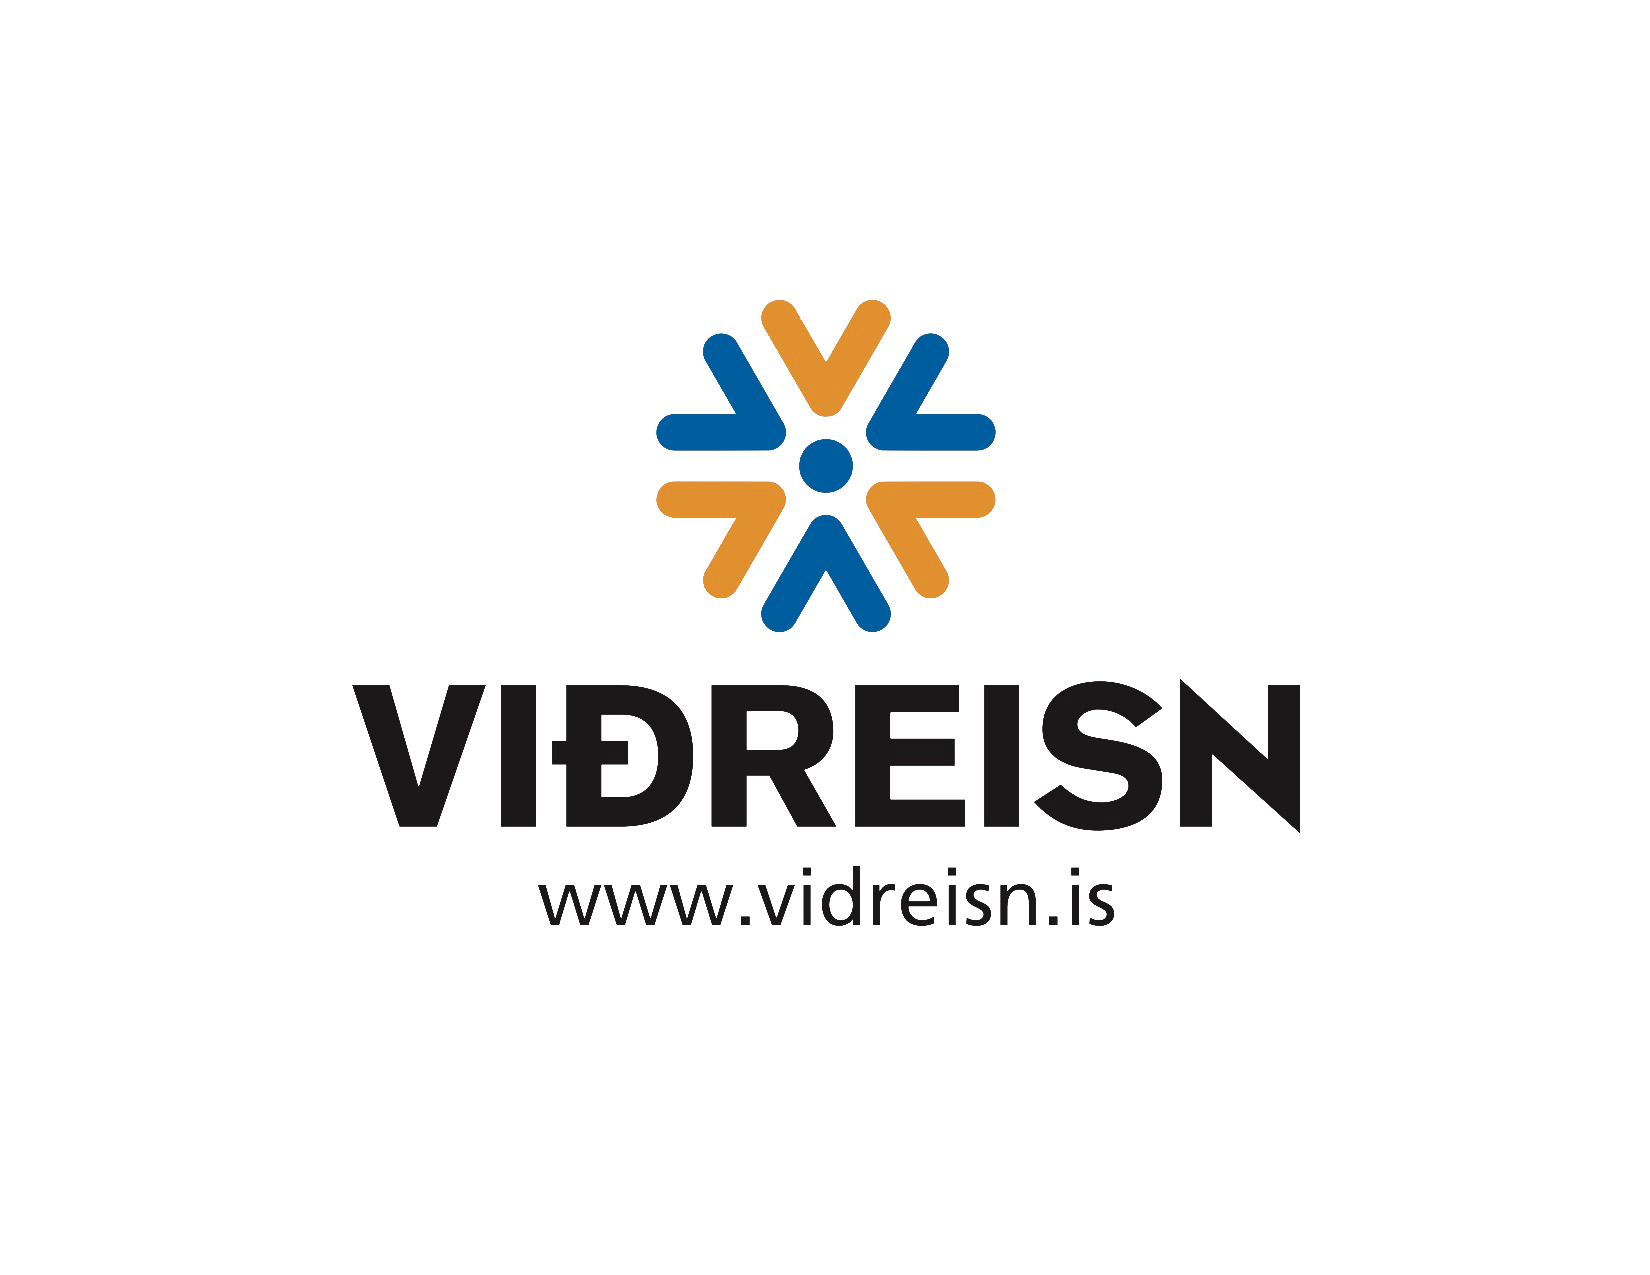 vidreisn_logo_trans